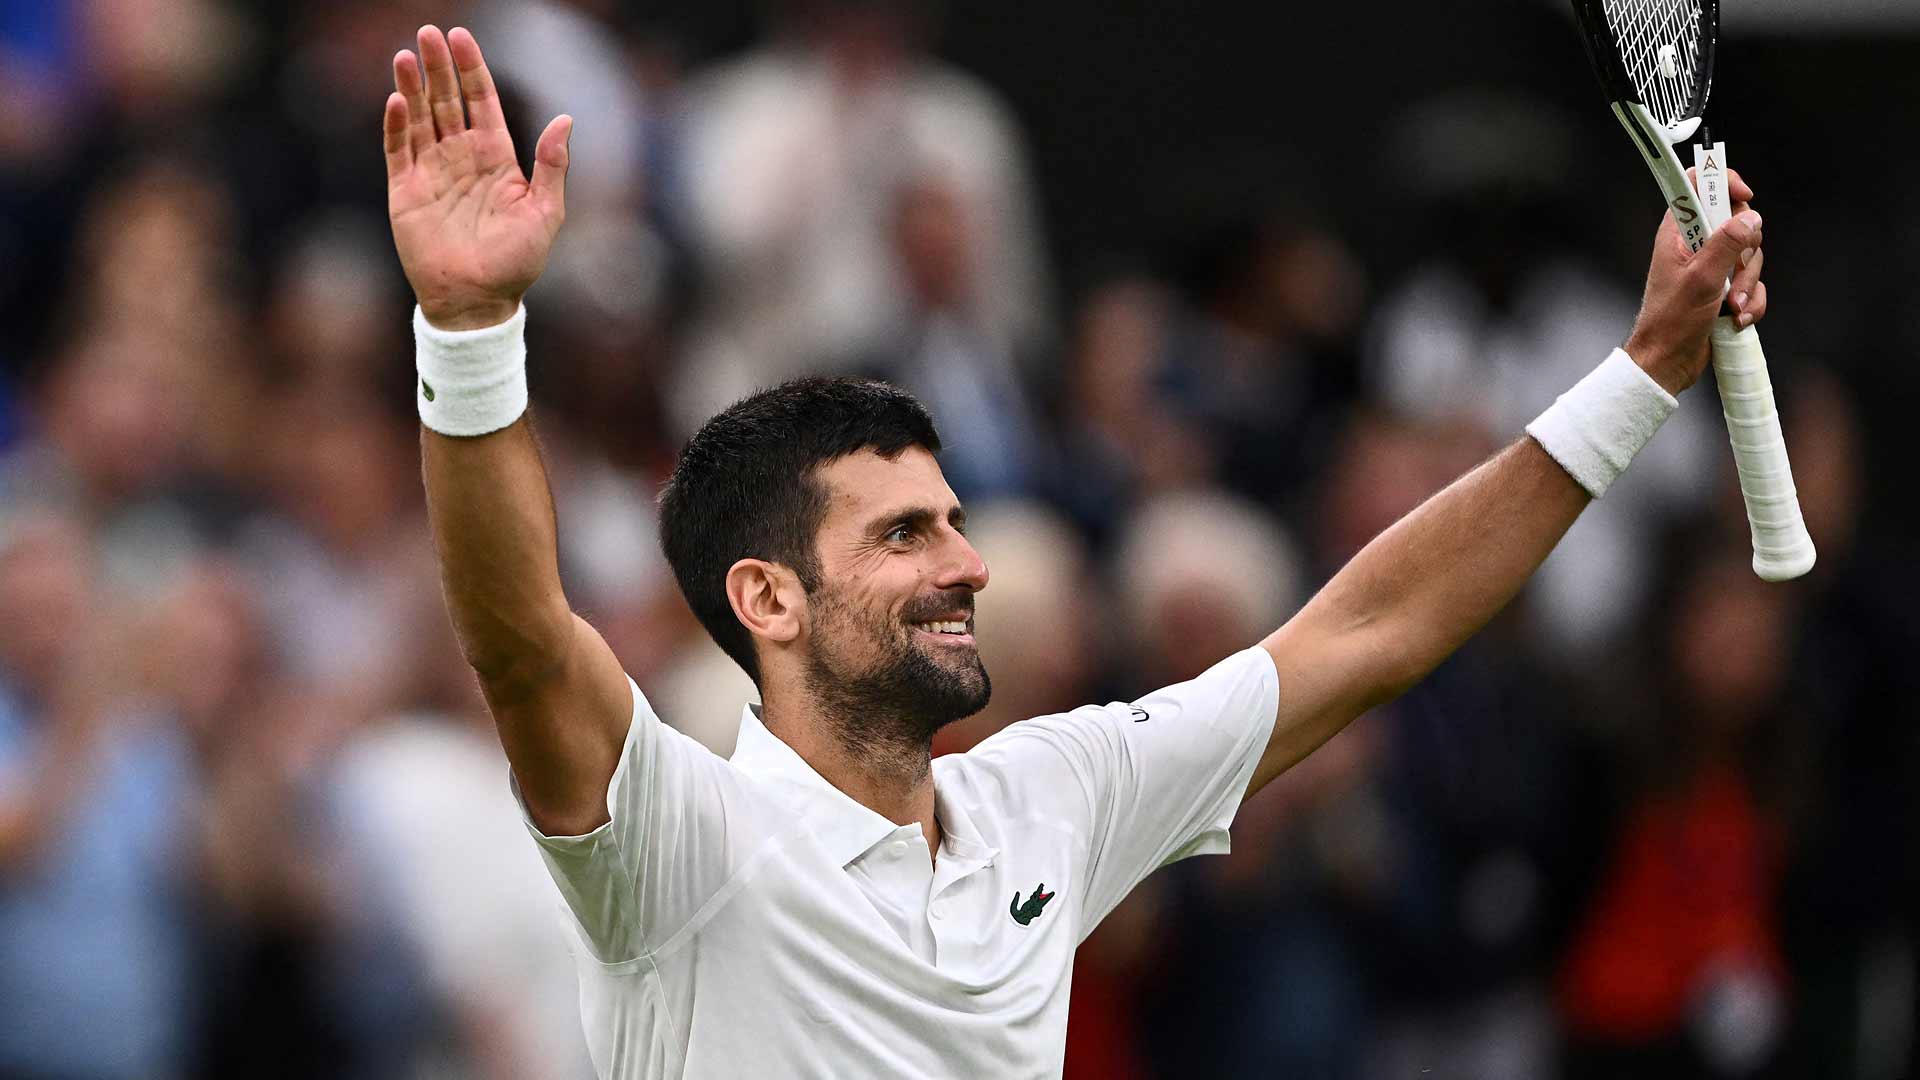 Novak Djokovic celebrates after notching his 34th consecutive Wimbledon win on Friday against Jannik Sinner.